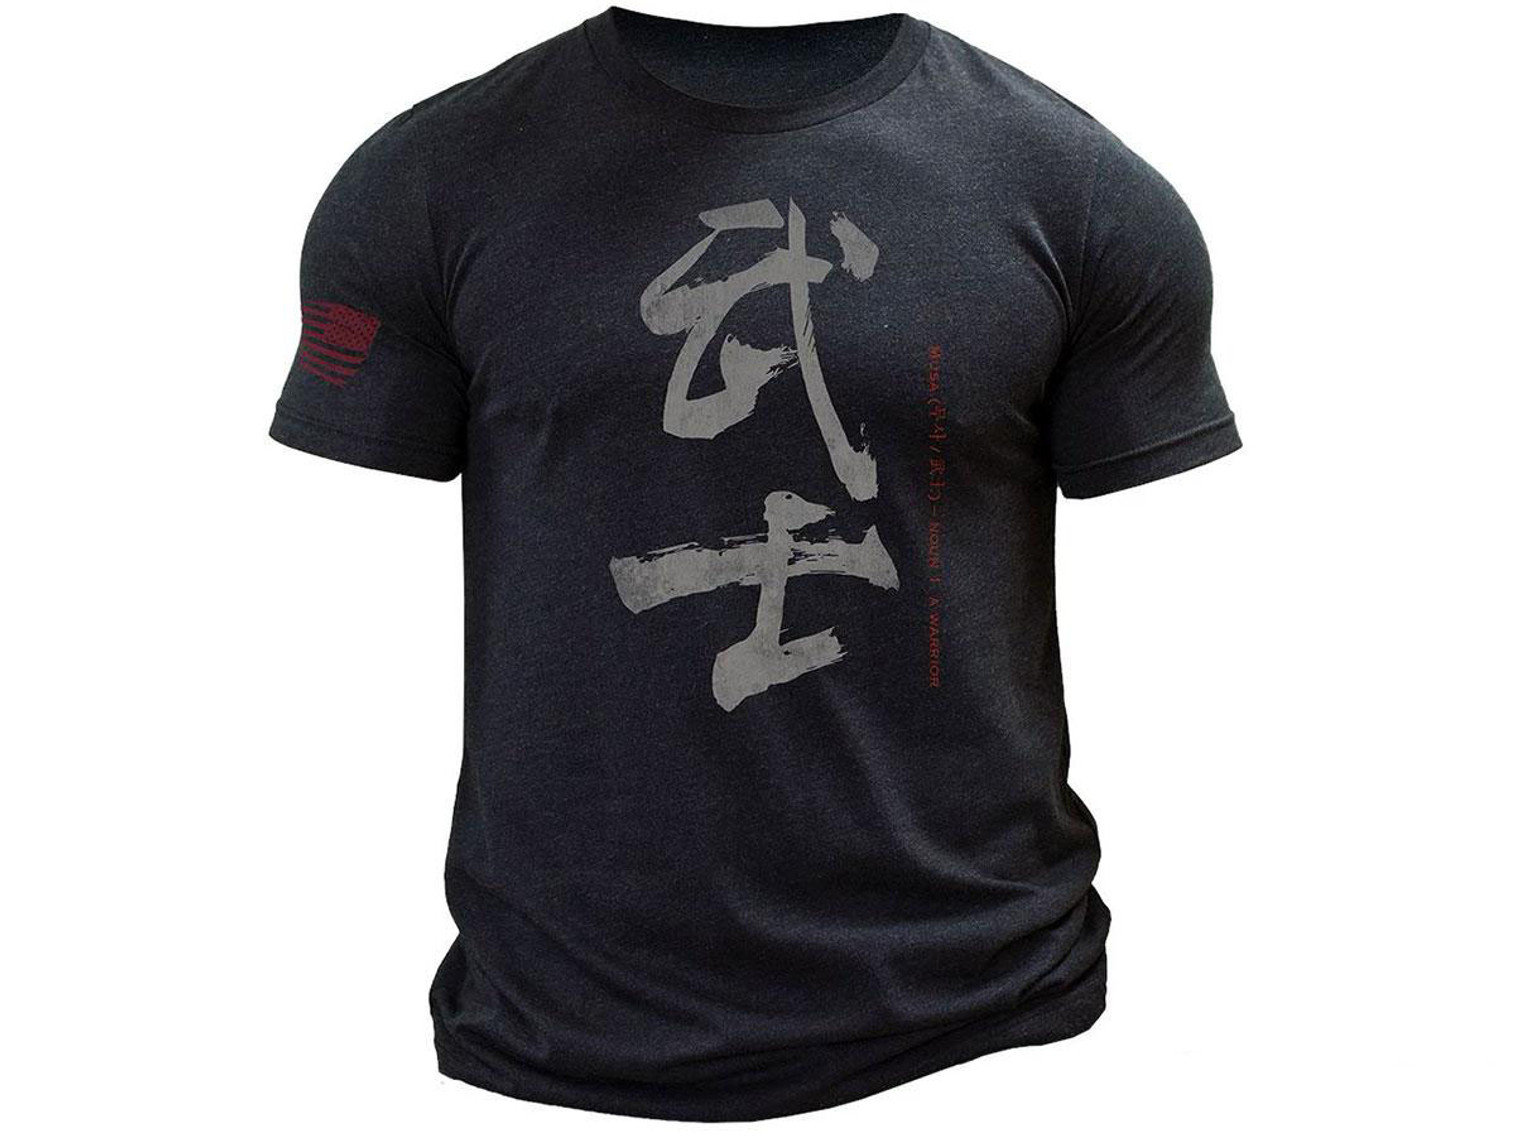 MUSA "Calligraphy" Shirt (Color: Black / Small)